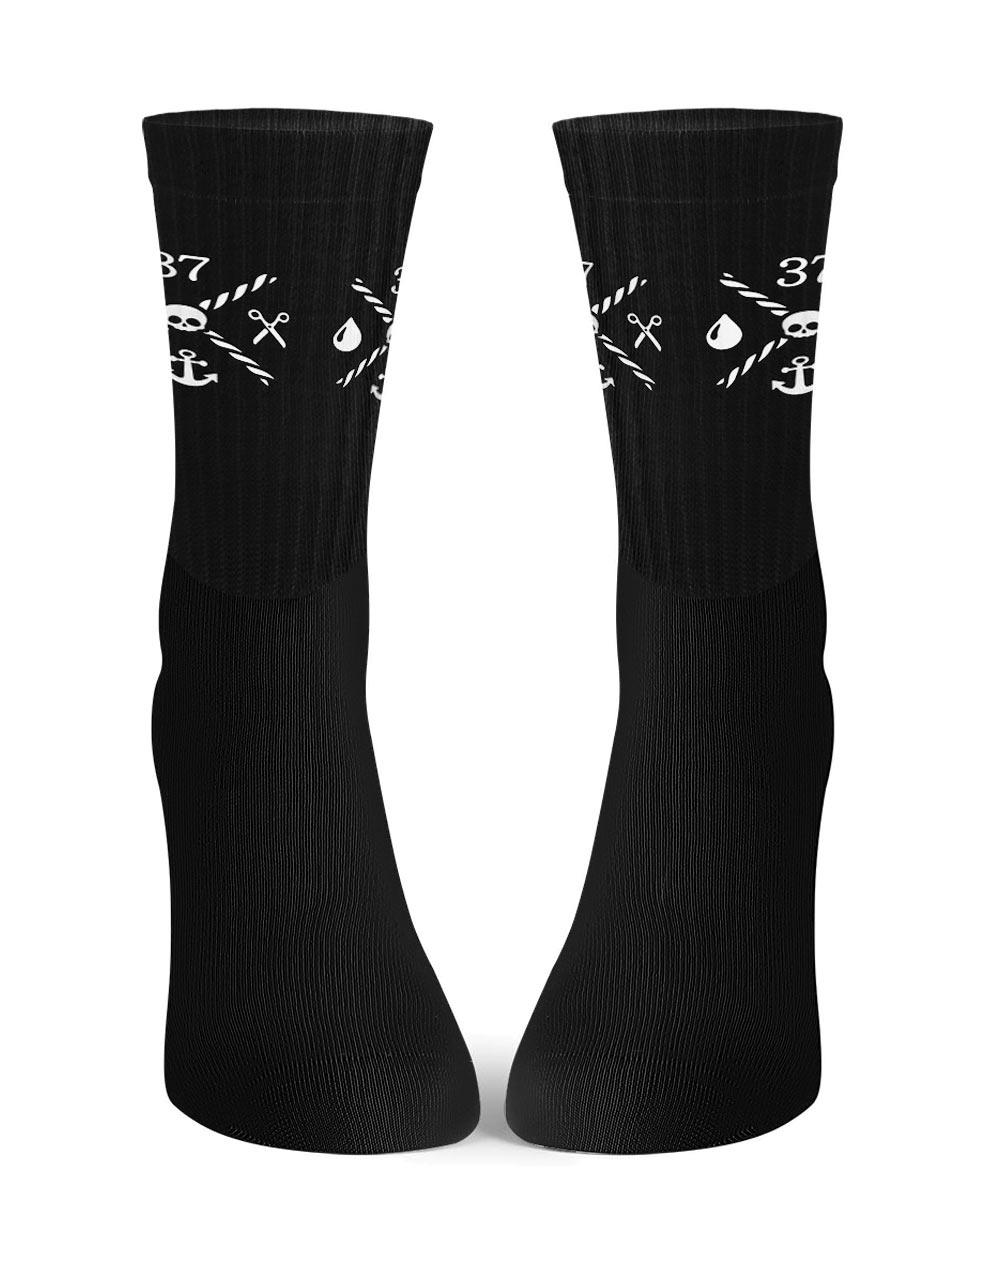 THE QUARTER MASTERS socks in black with white logo